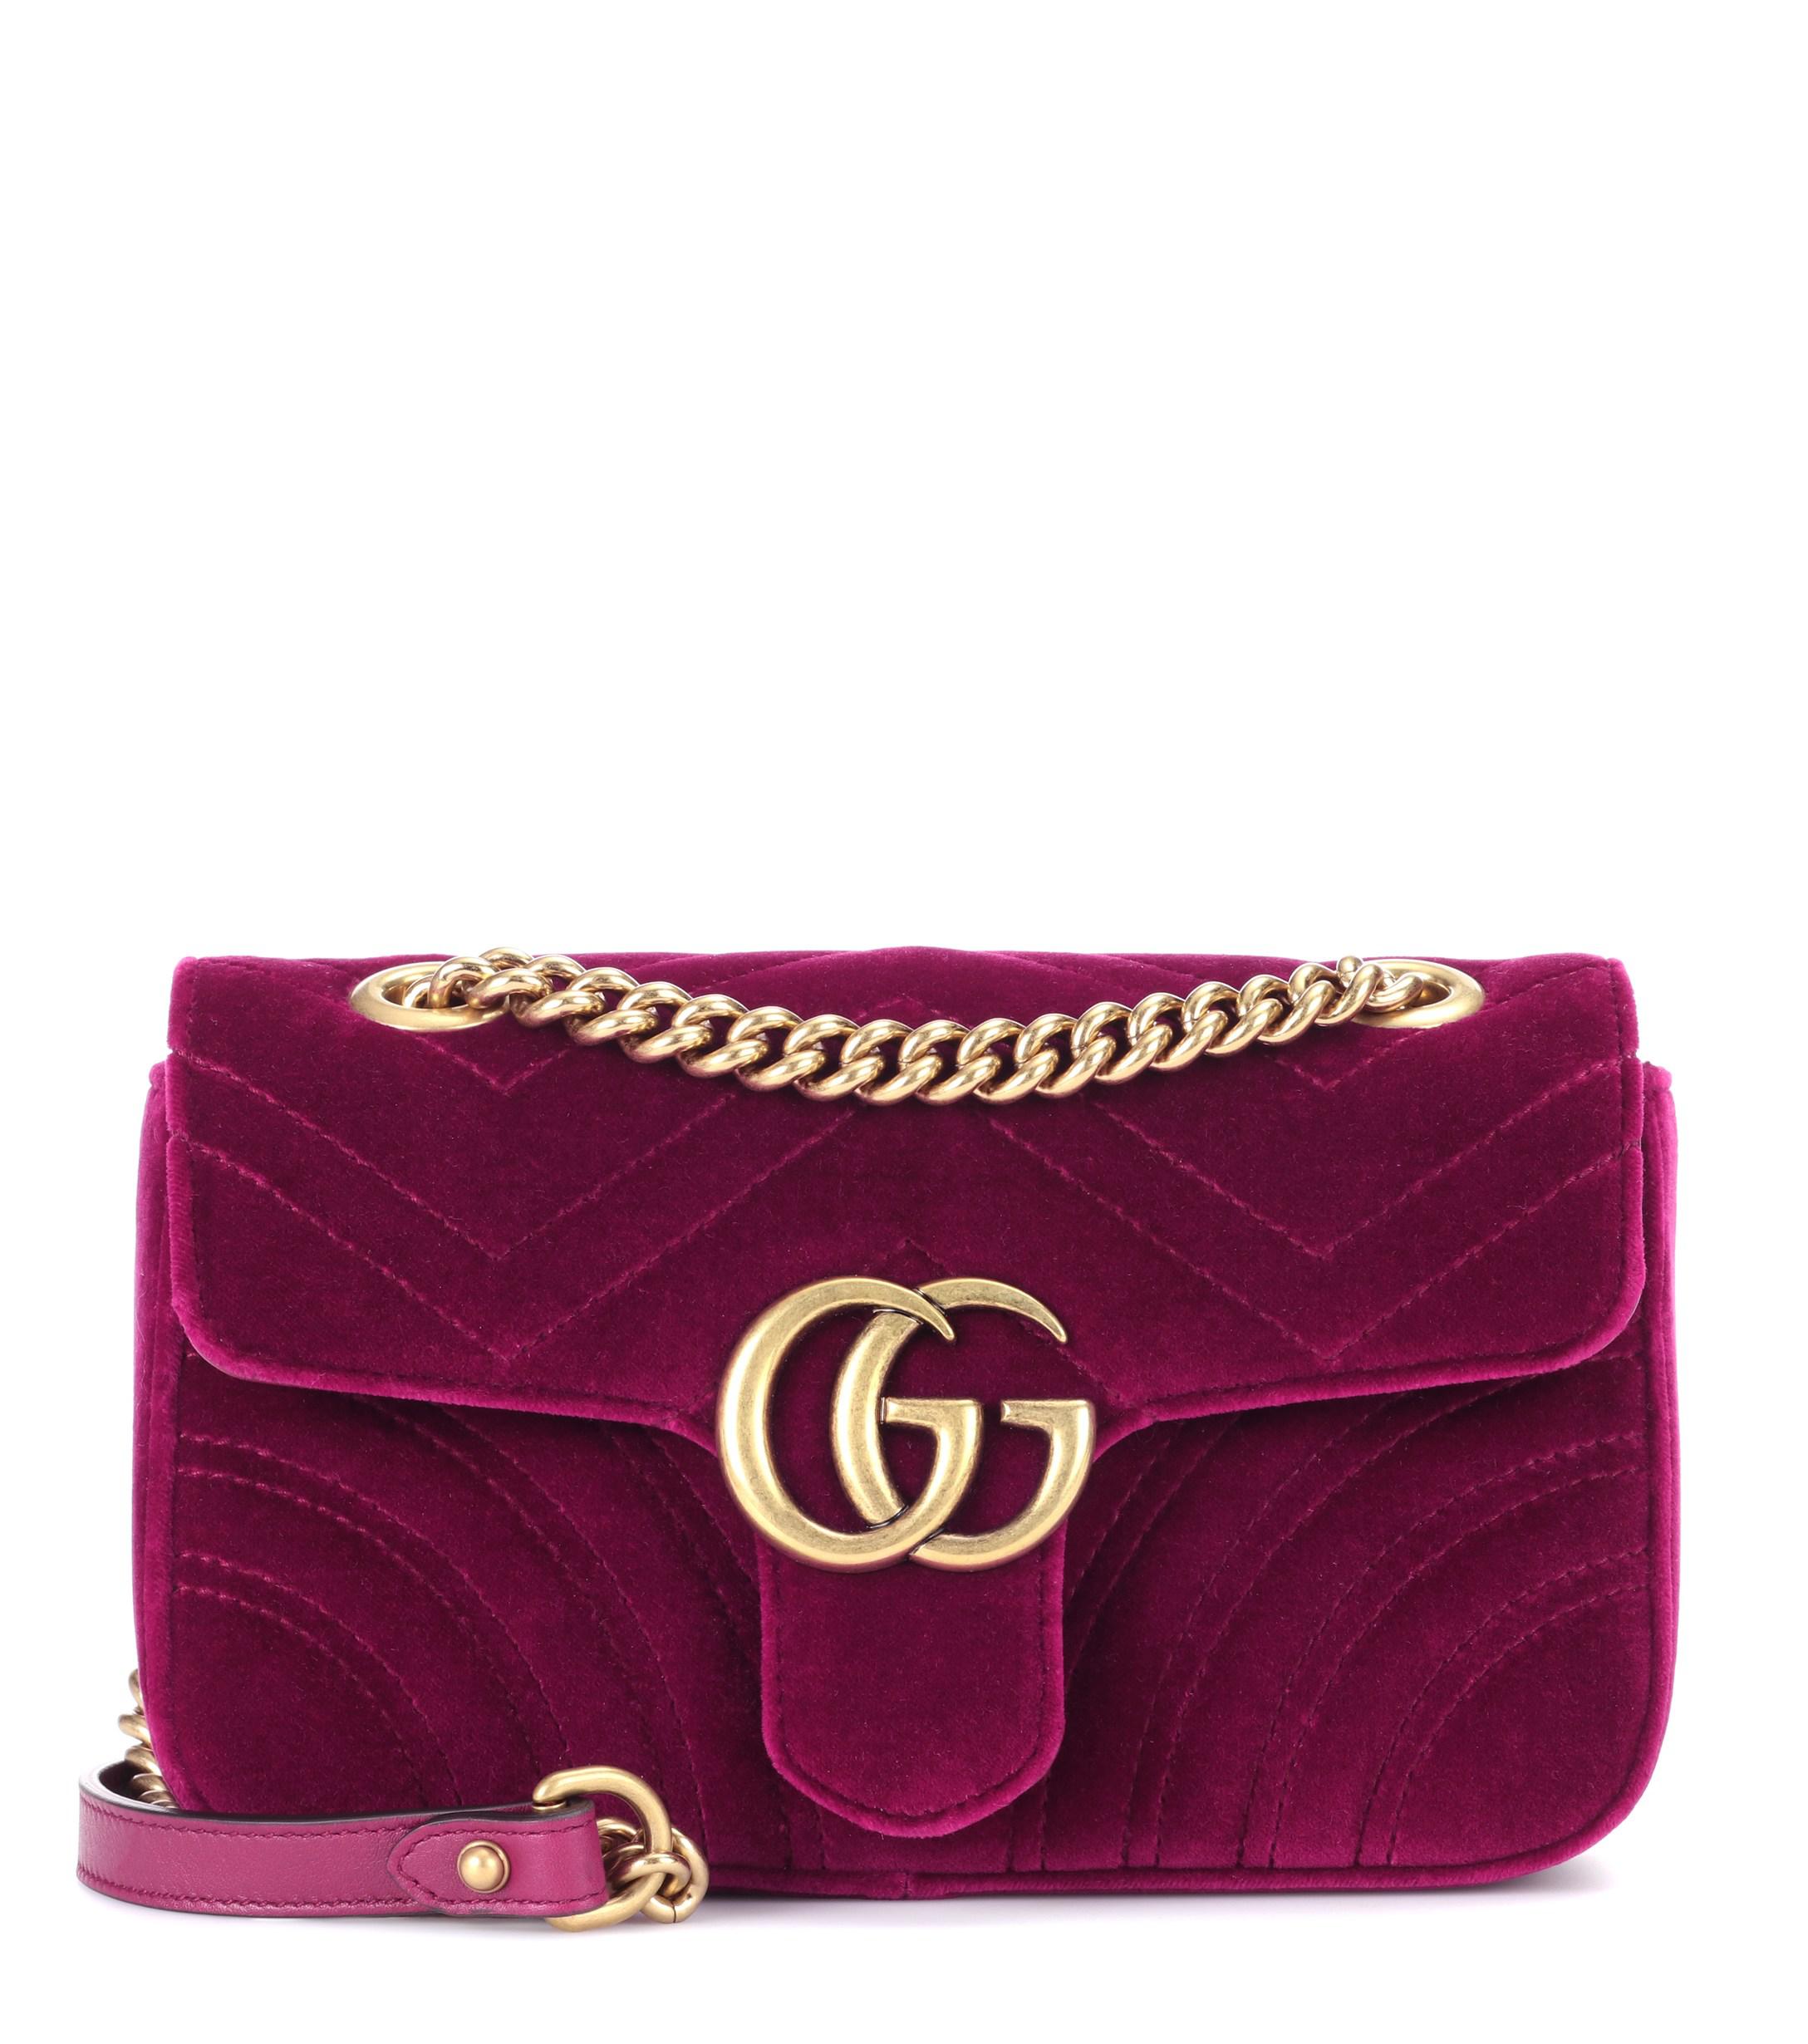 Gucci GG Marmont Mini Velvet Shoulder Bag in Purple - Lyst